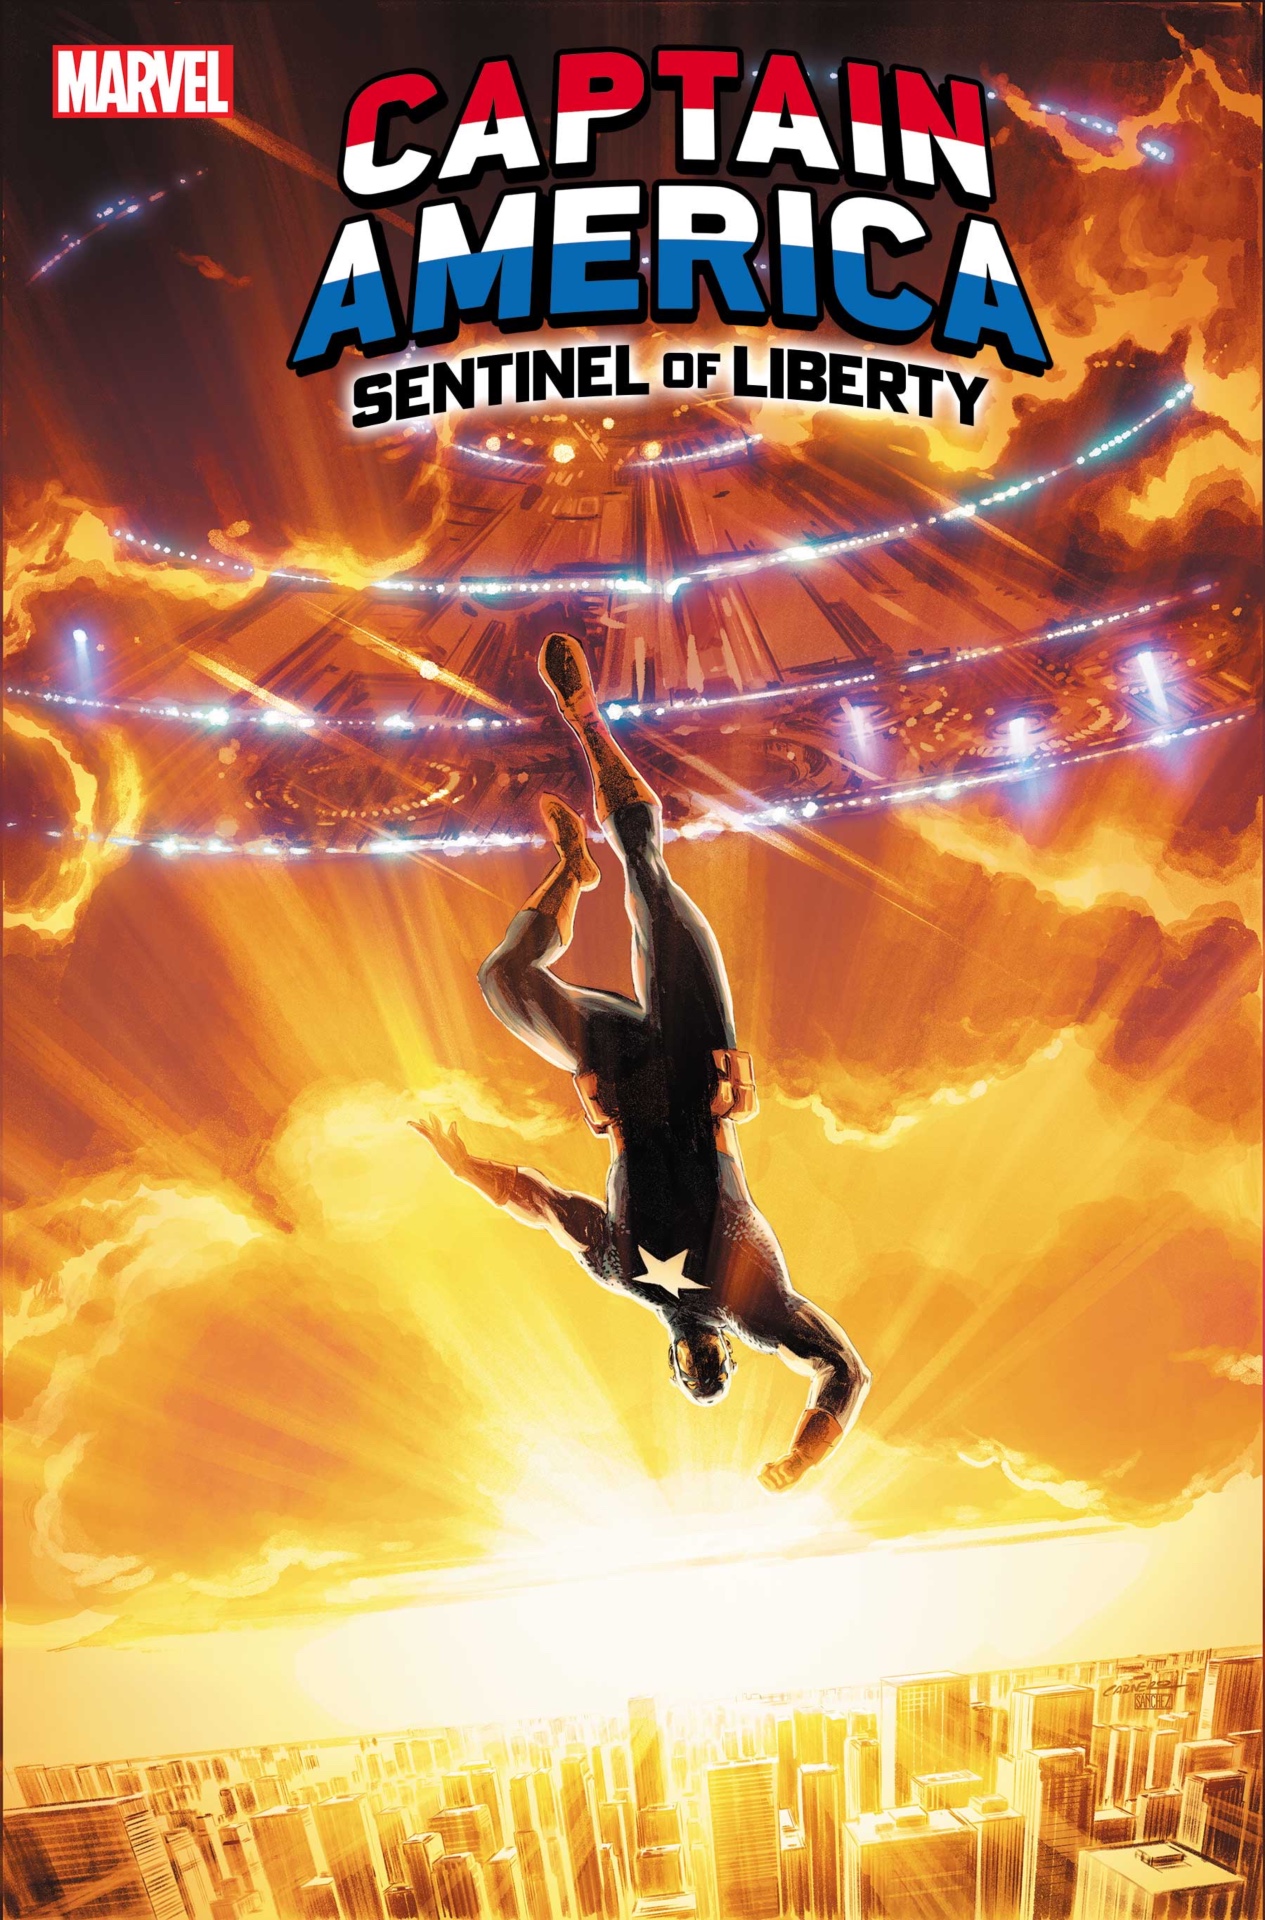 Captain America: Sentinel of Liberty #6 cover